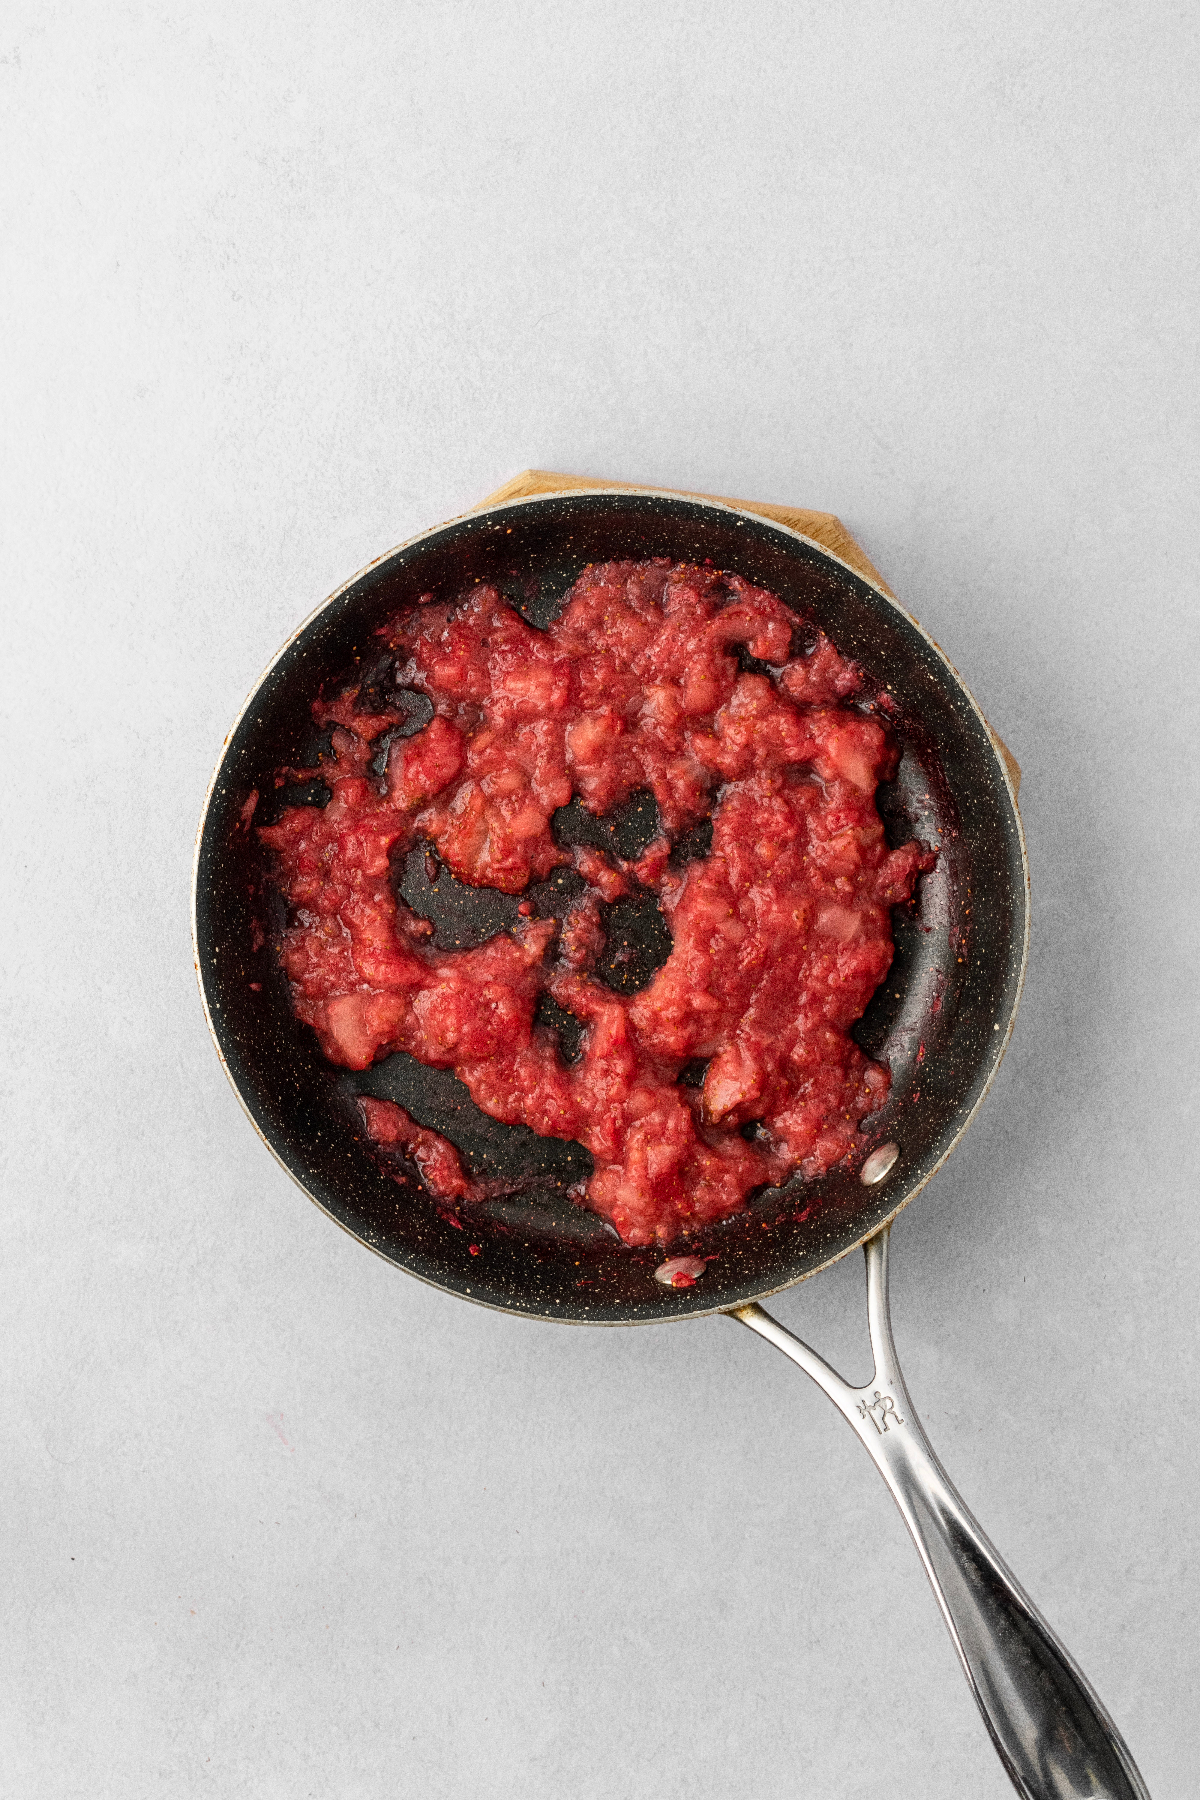 Strawberry puree in a saucepan.